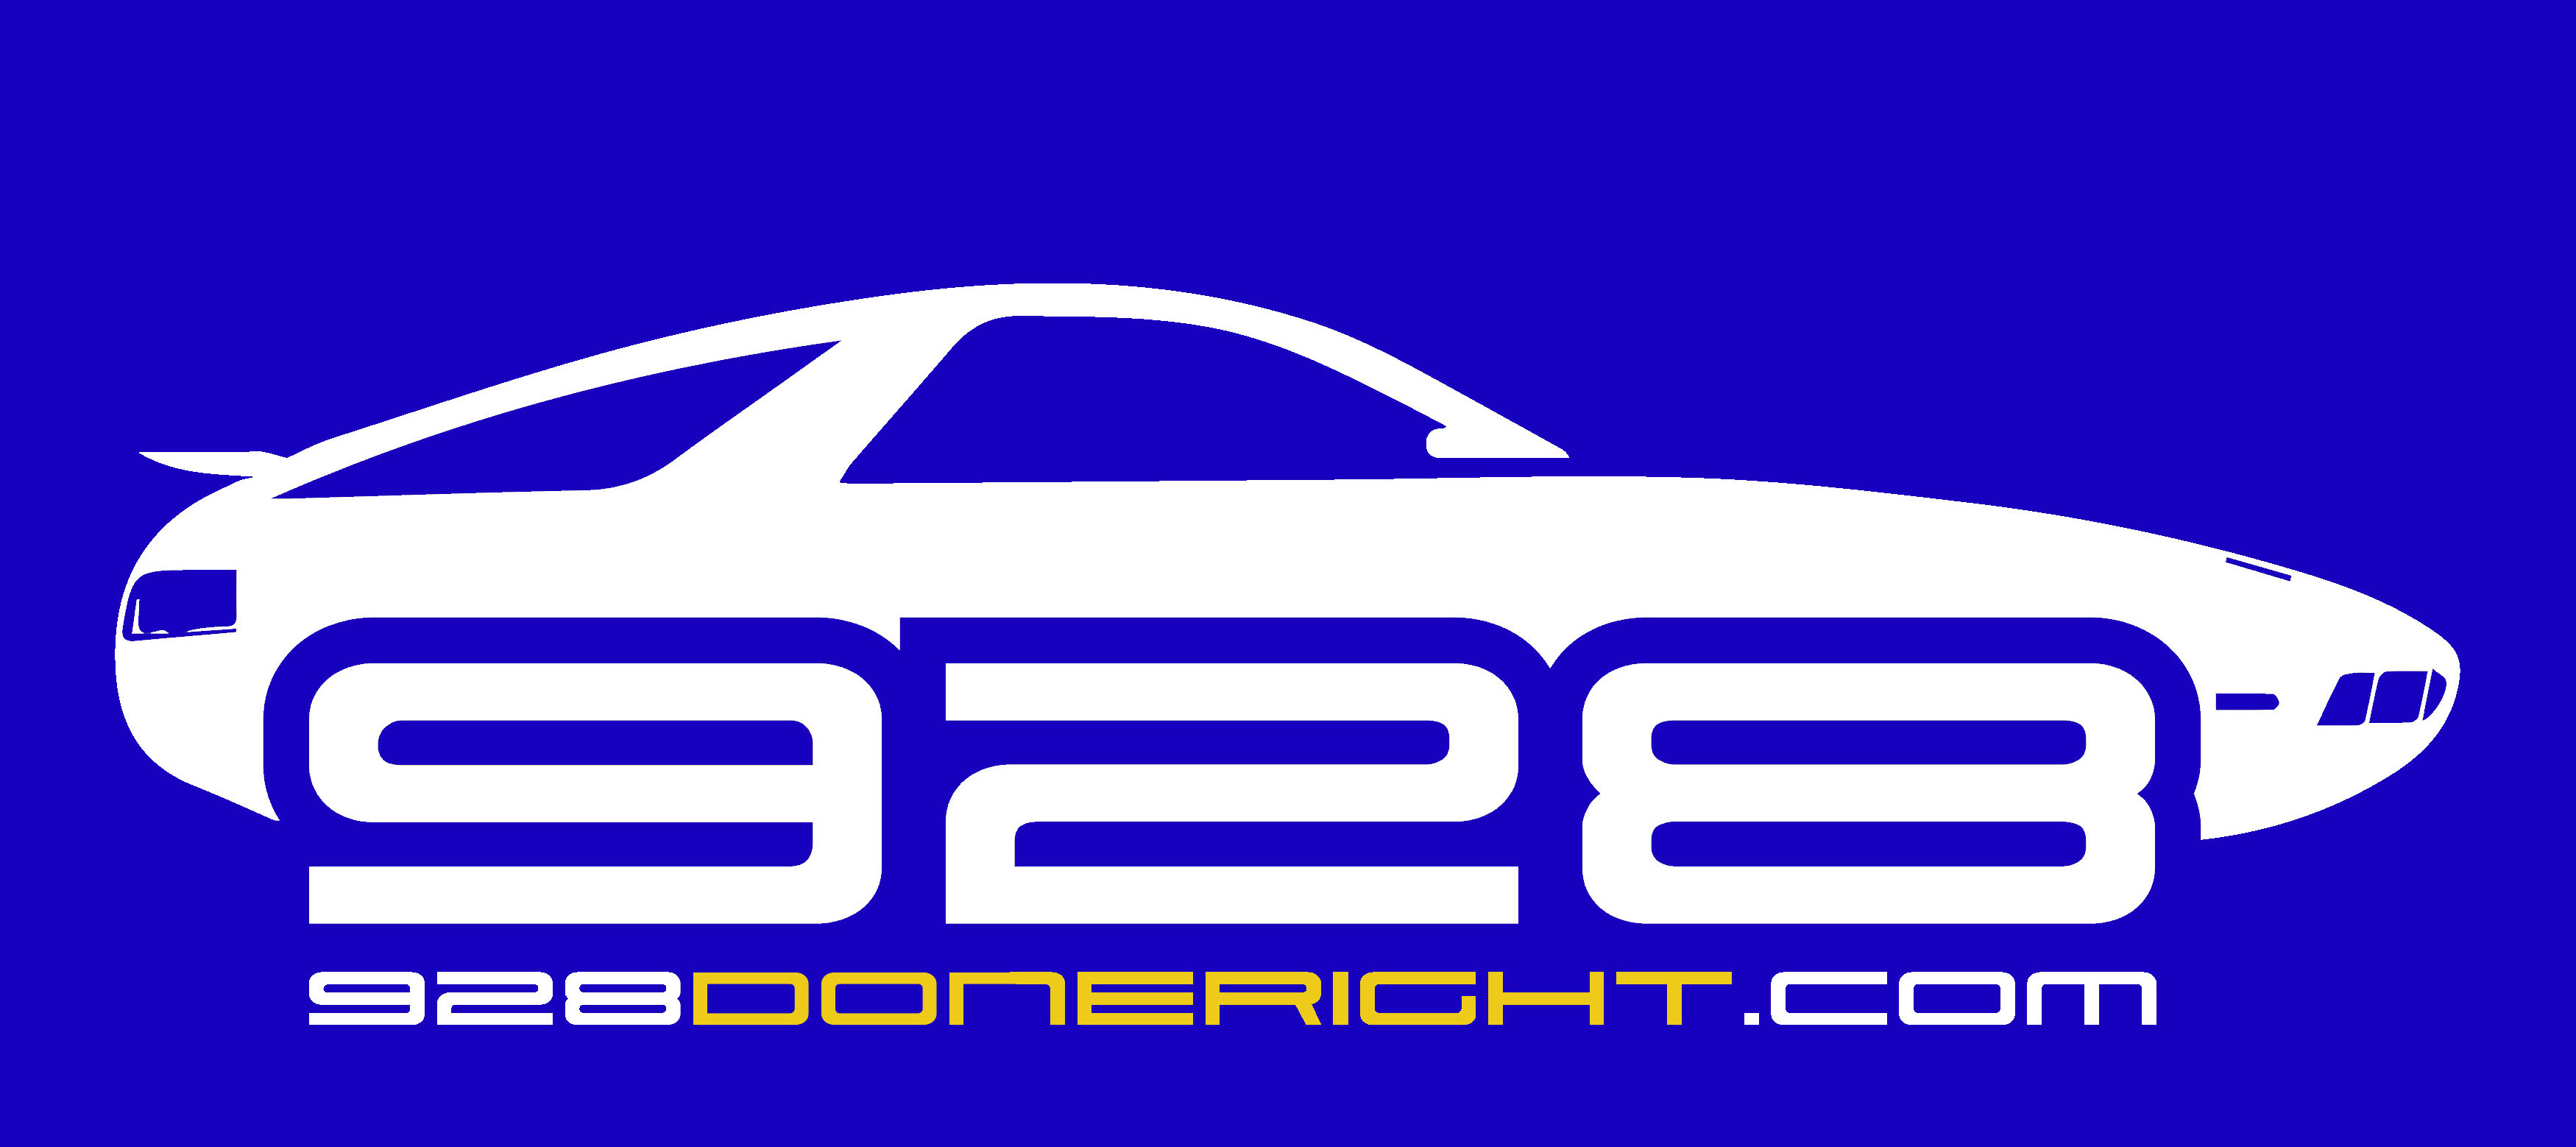 Porsche-928-Done-Right-logo.jpg